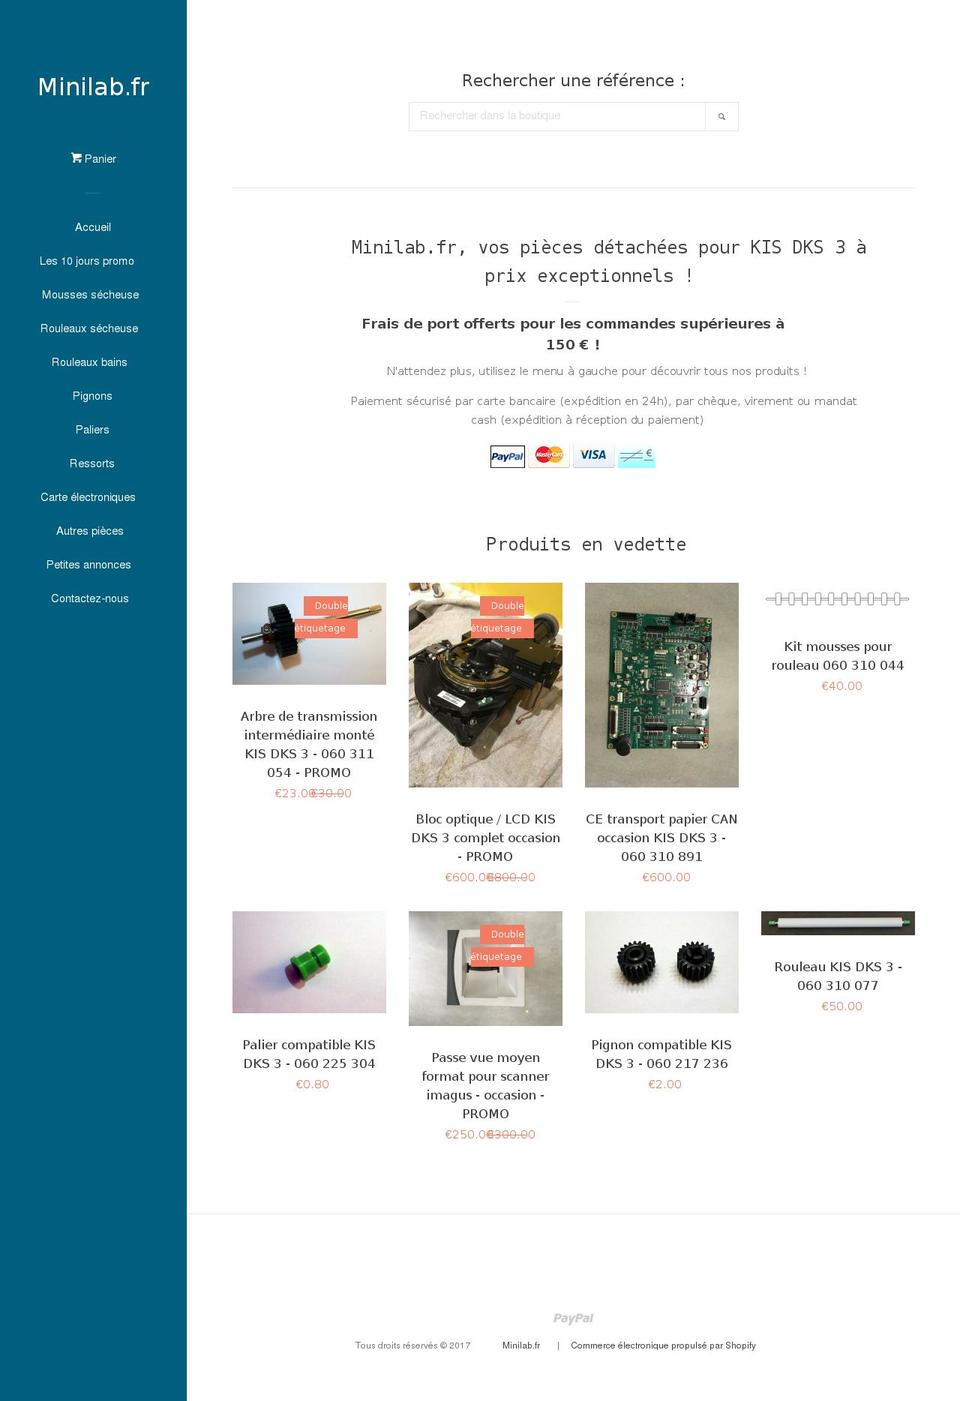 minilab.fr shopify website screenshot